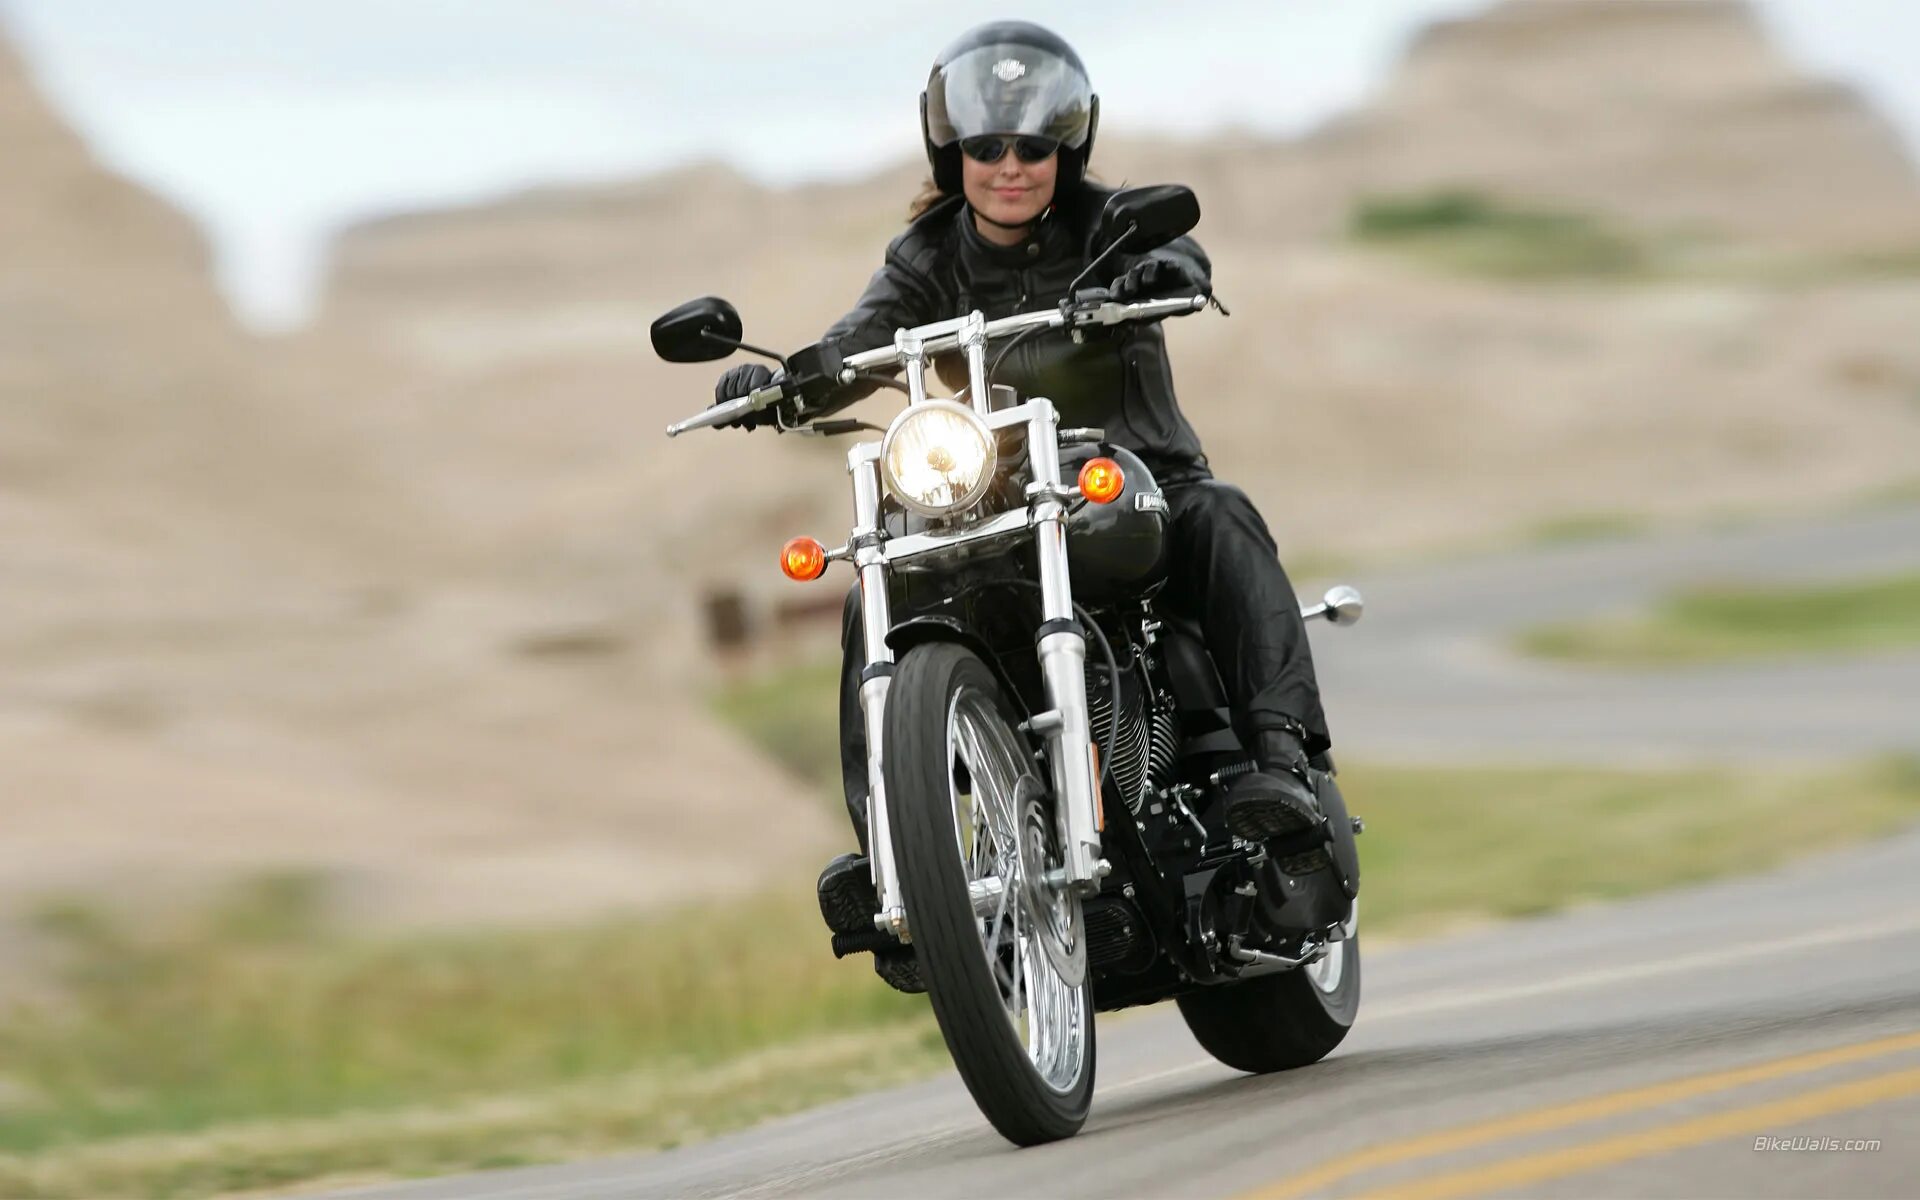 Harley Davidson 2006 Softail Heritage. Женский Харлей Дэвидсон мотоцикл. Харлей Дэвидсон чоппер езда. Девушка на мотоцикле. Стучит мотоцикл